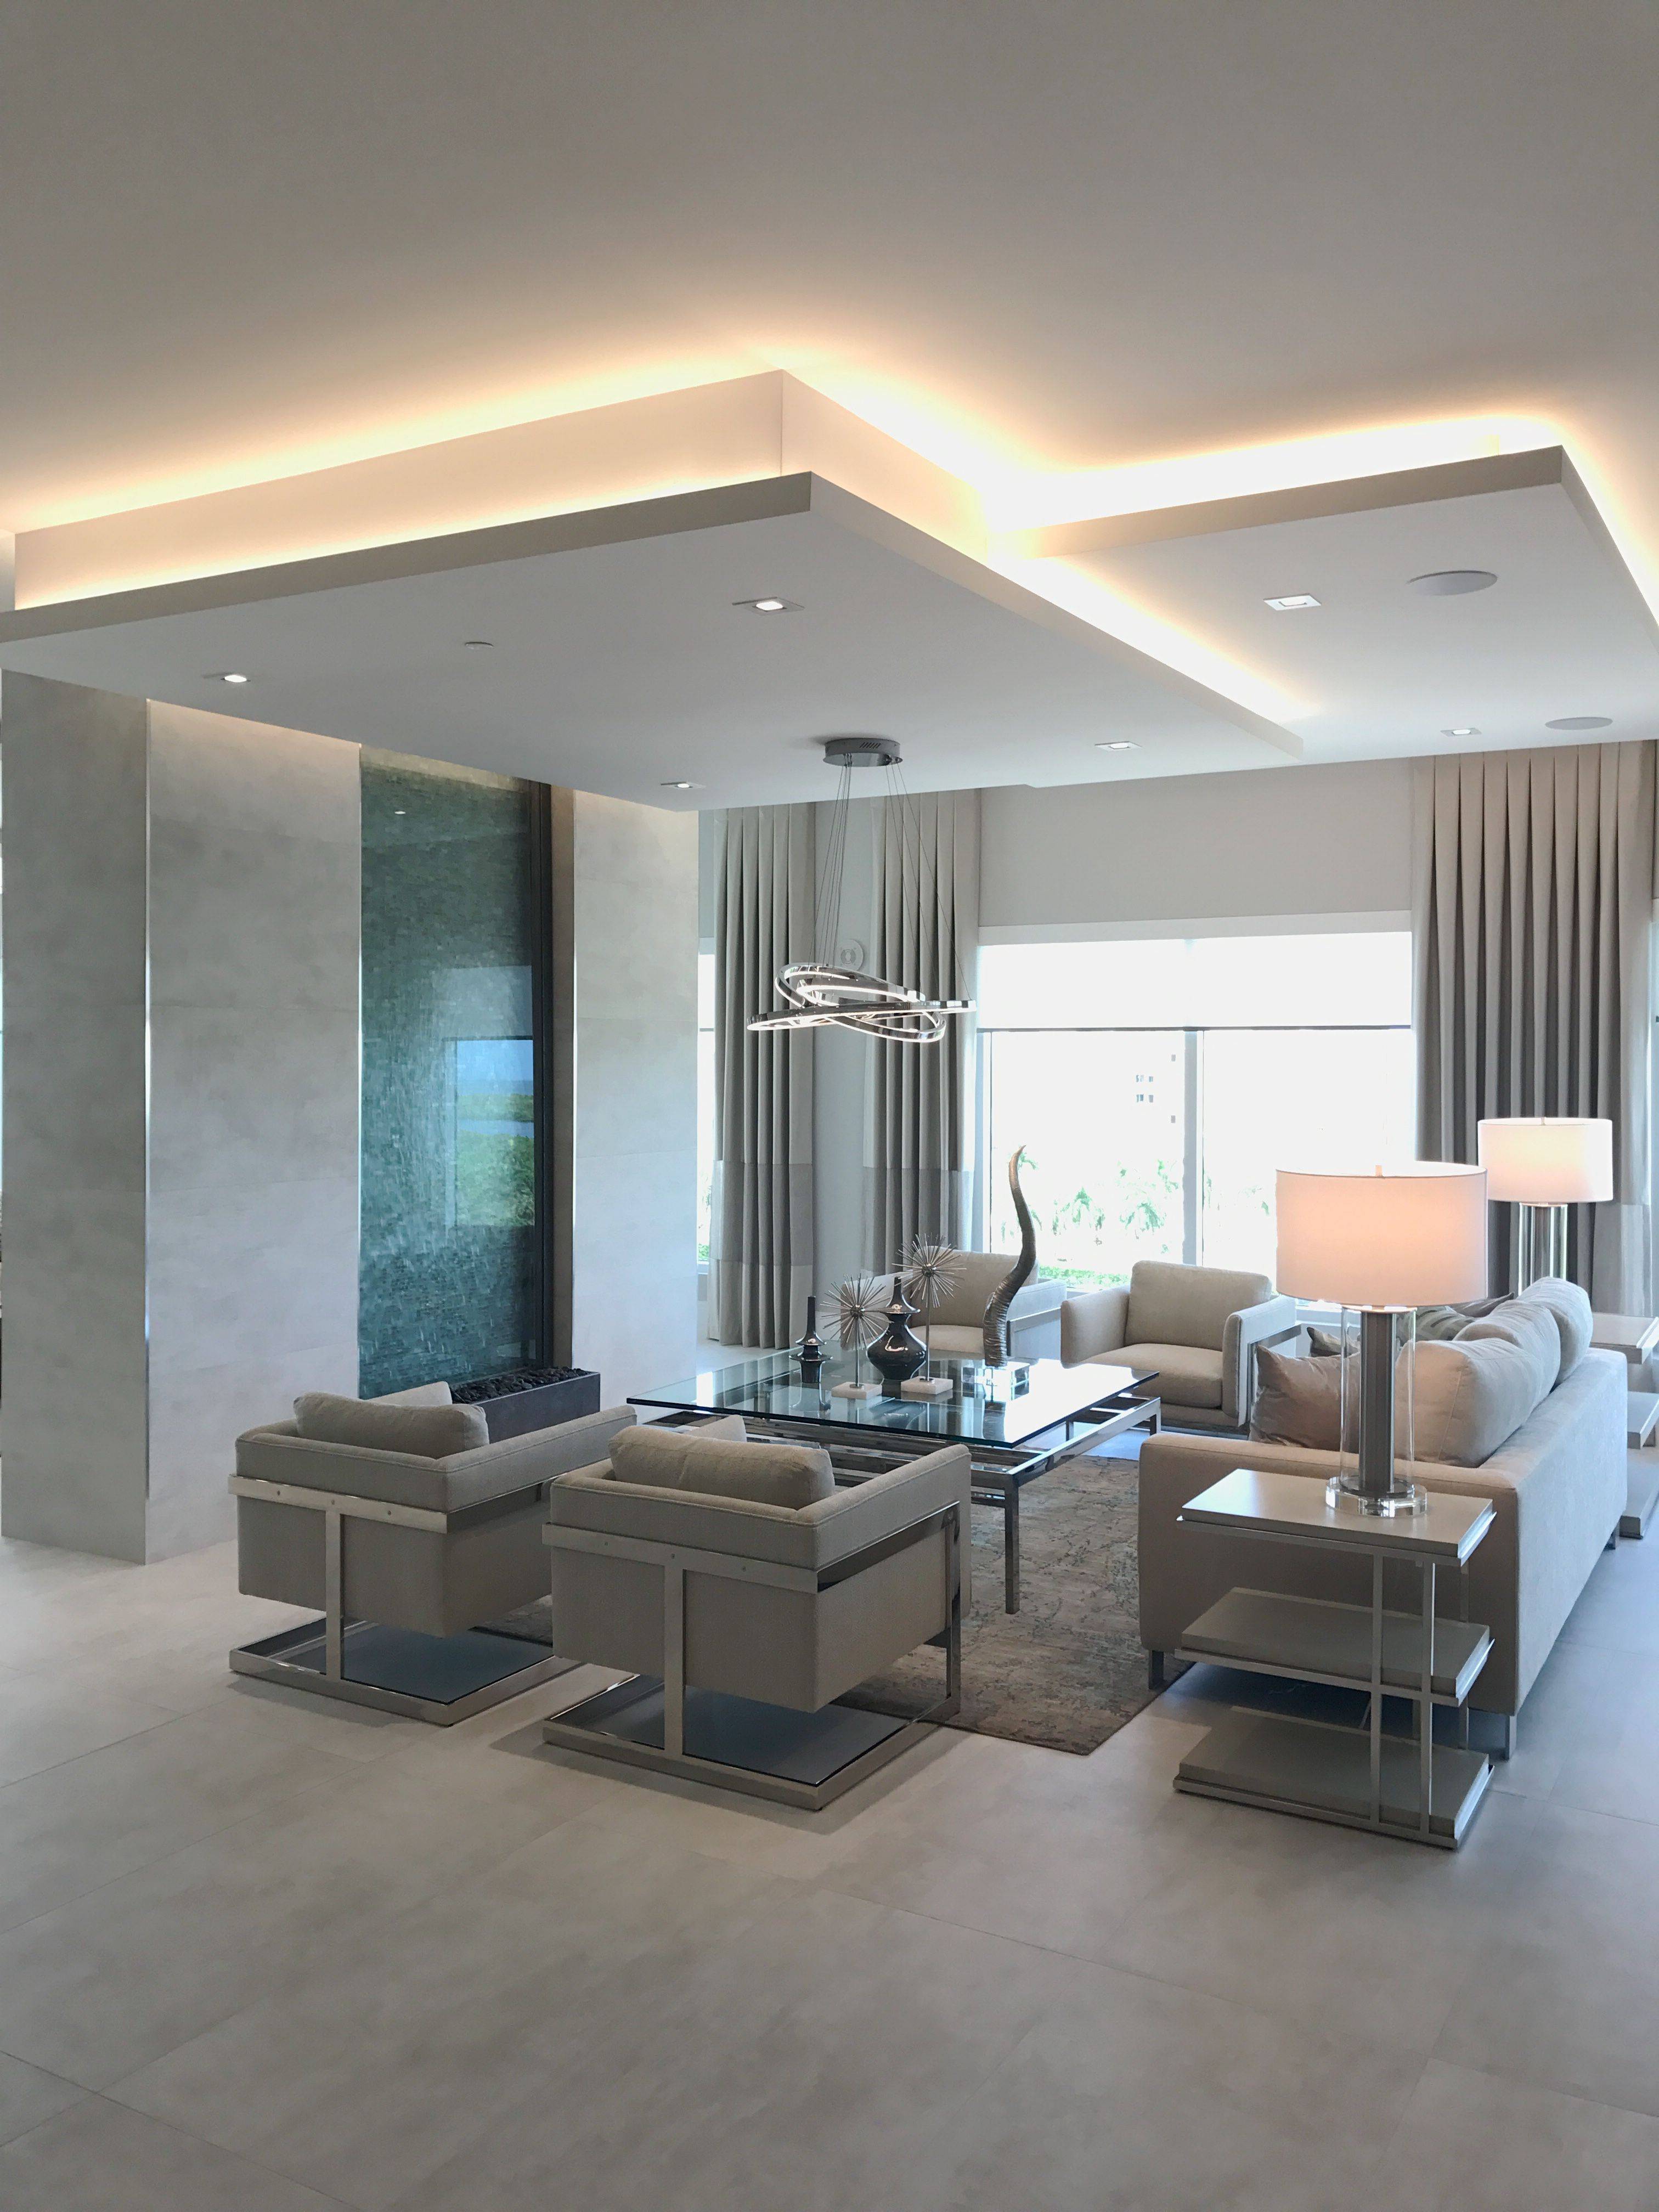 Lounge Ceiling Designs | Home Design